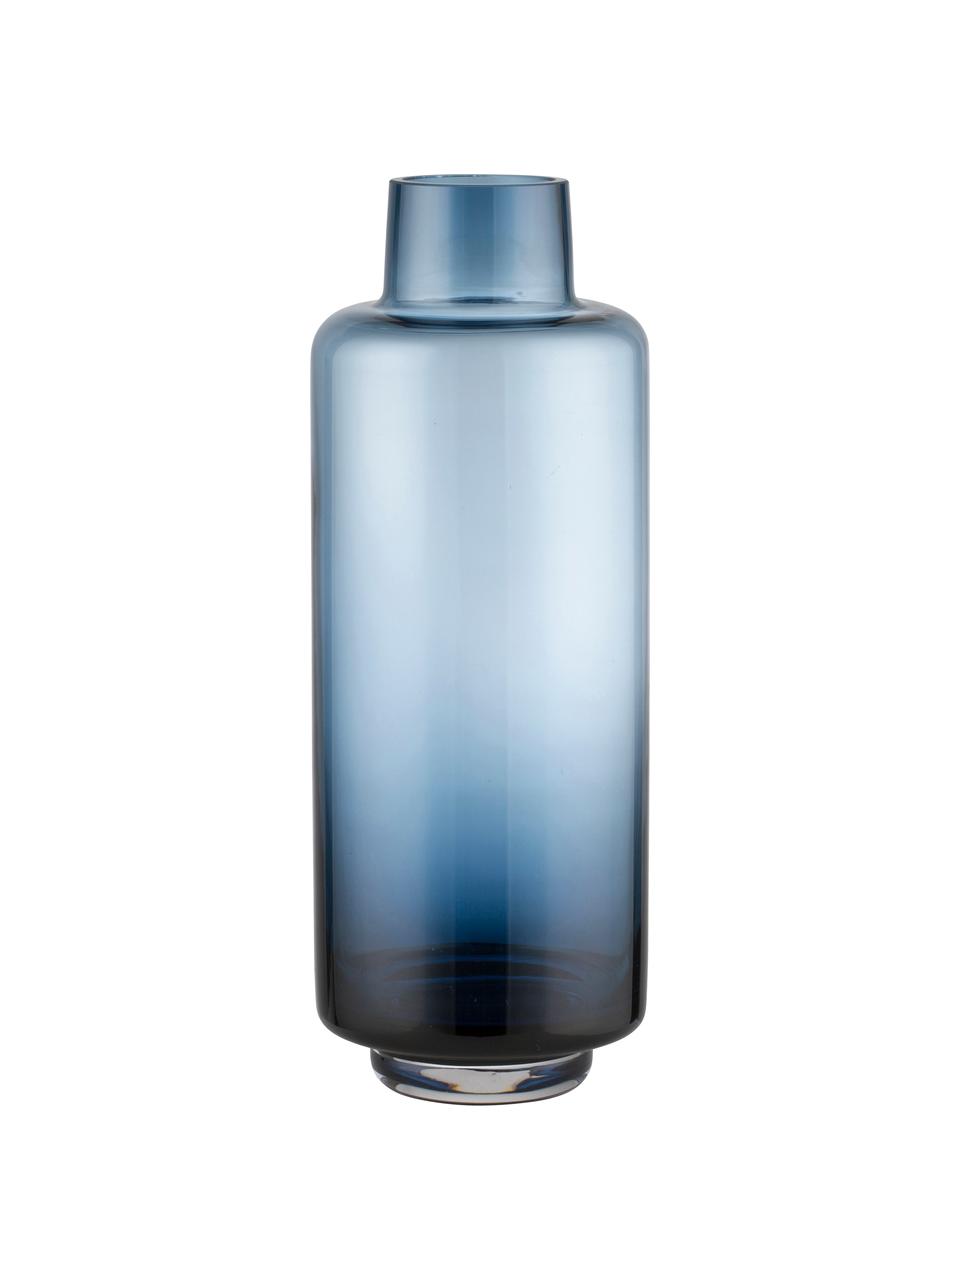 Grote mondgeblazen vaas Hedria in blauw, Glas, Blauw, Ø 11 x H 30 cm